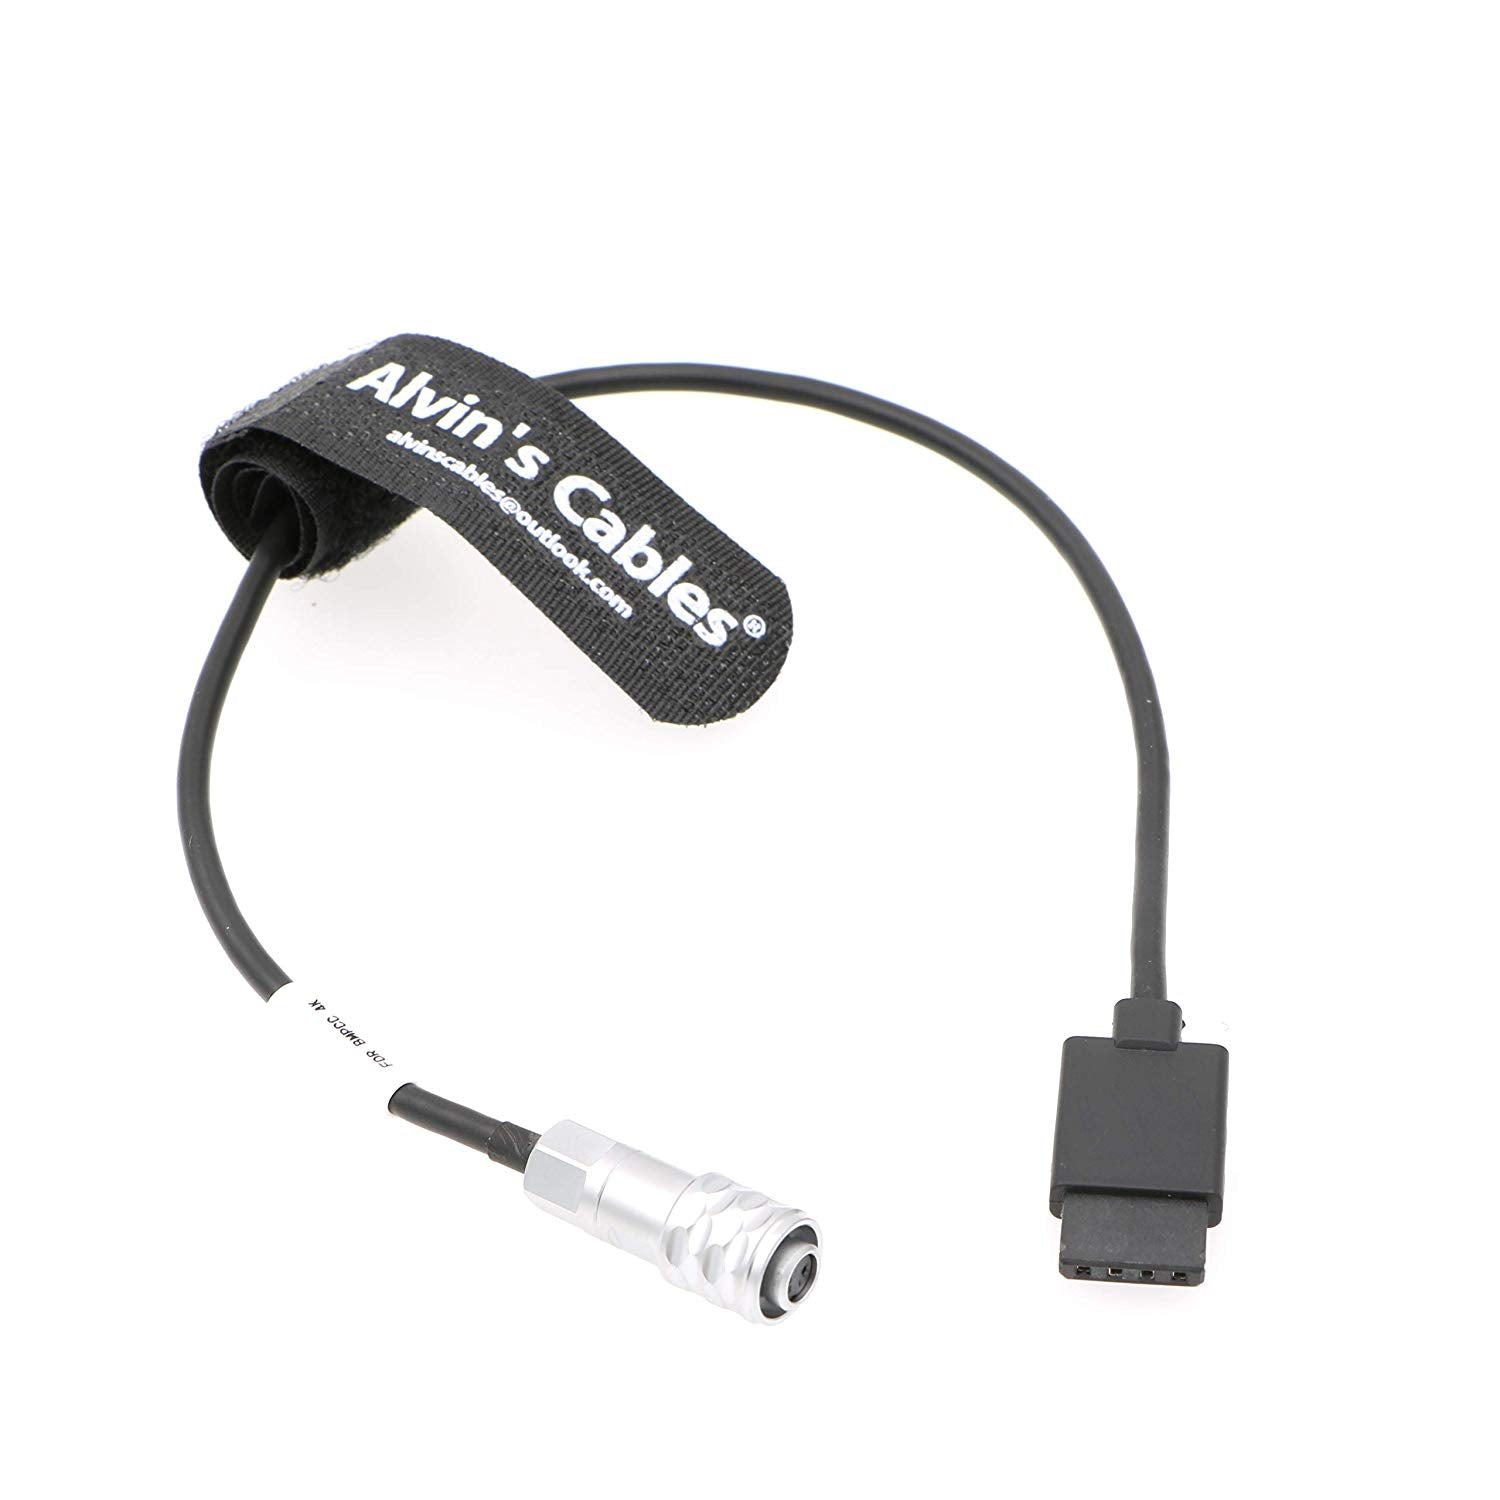 Alvin's Cables BMPCC 4K Stromkabel für Blackmagic Pocket Cinema Camera 4K an DJI Ronin S Stabilizer